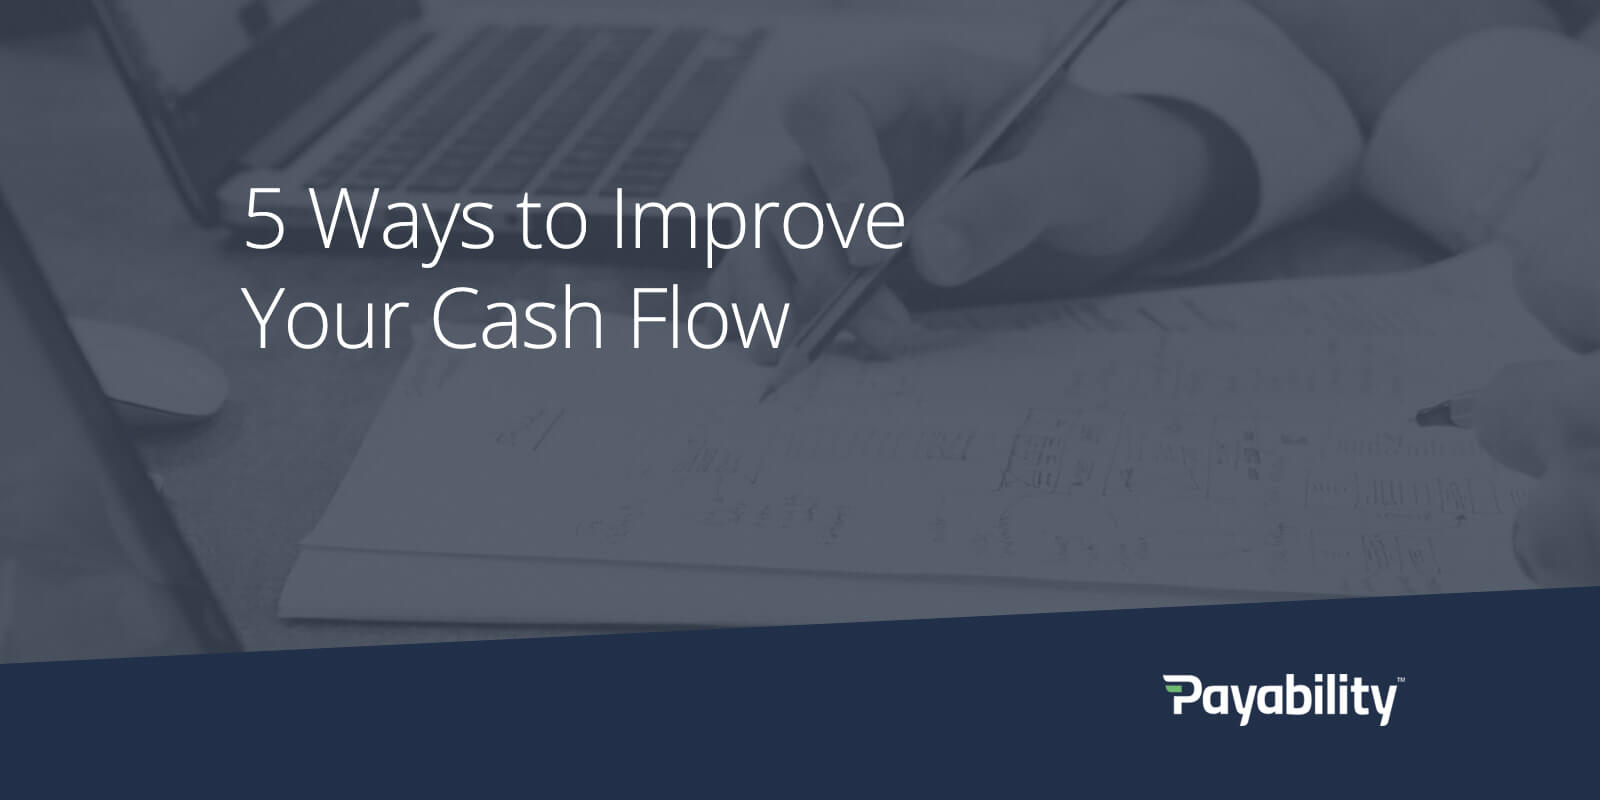 5 Ways to Improve Cash Flow for Online